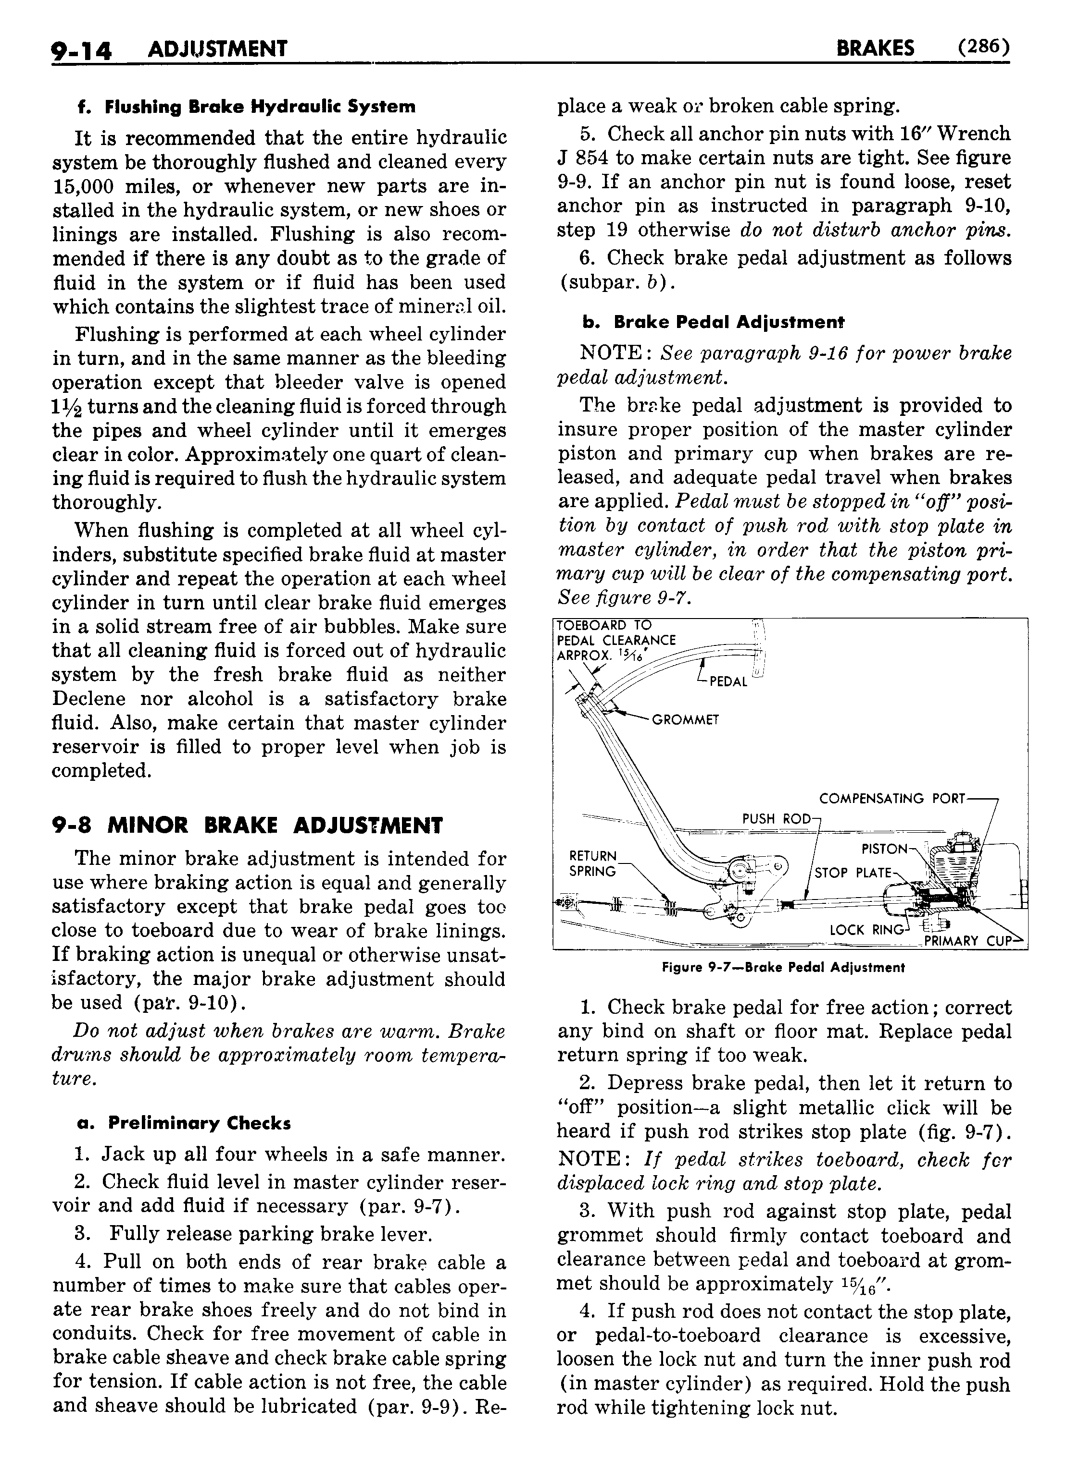 n_10 1955 Buick Shop Manual - Brakes-014-014.jpg